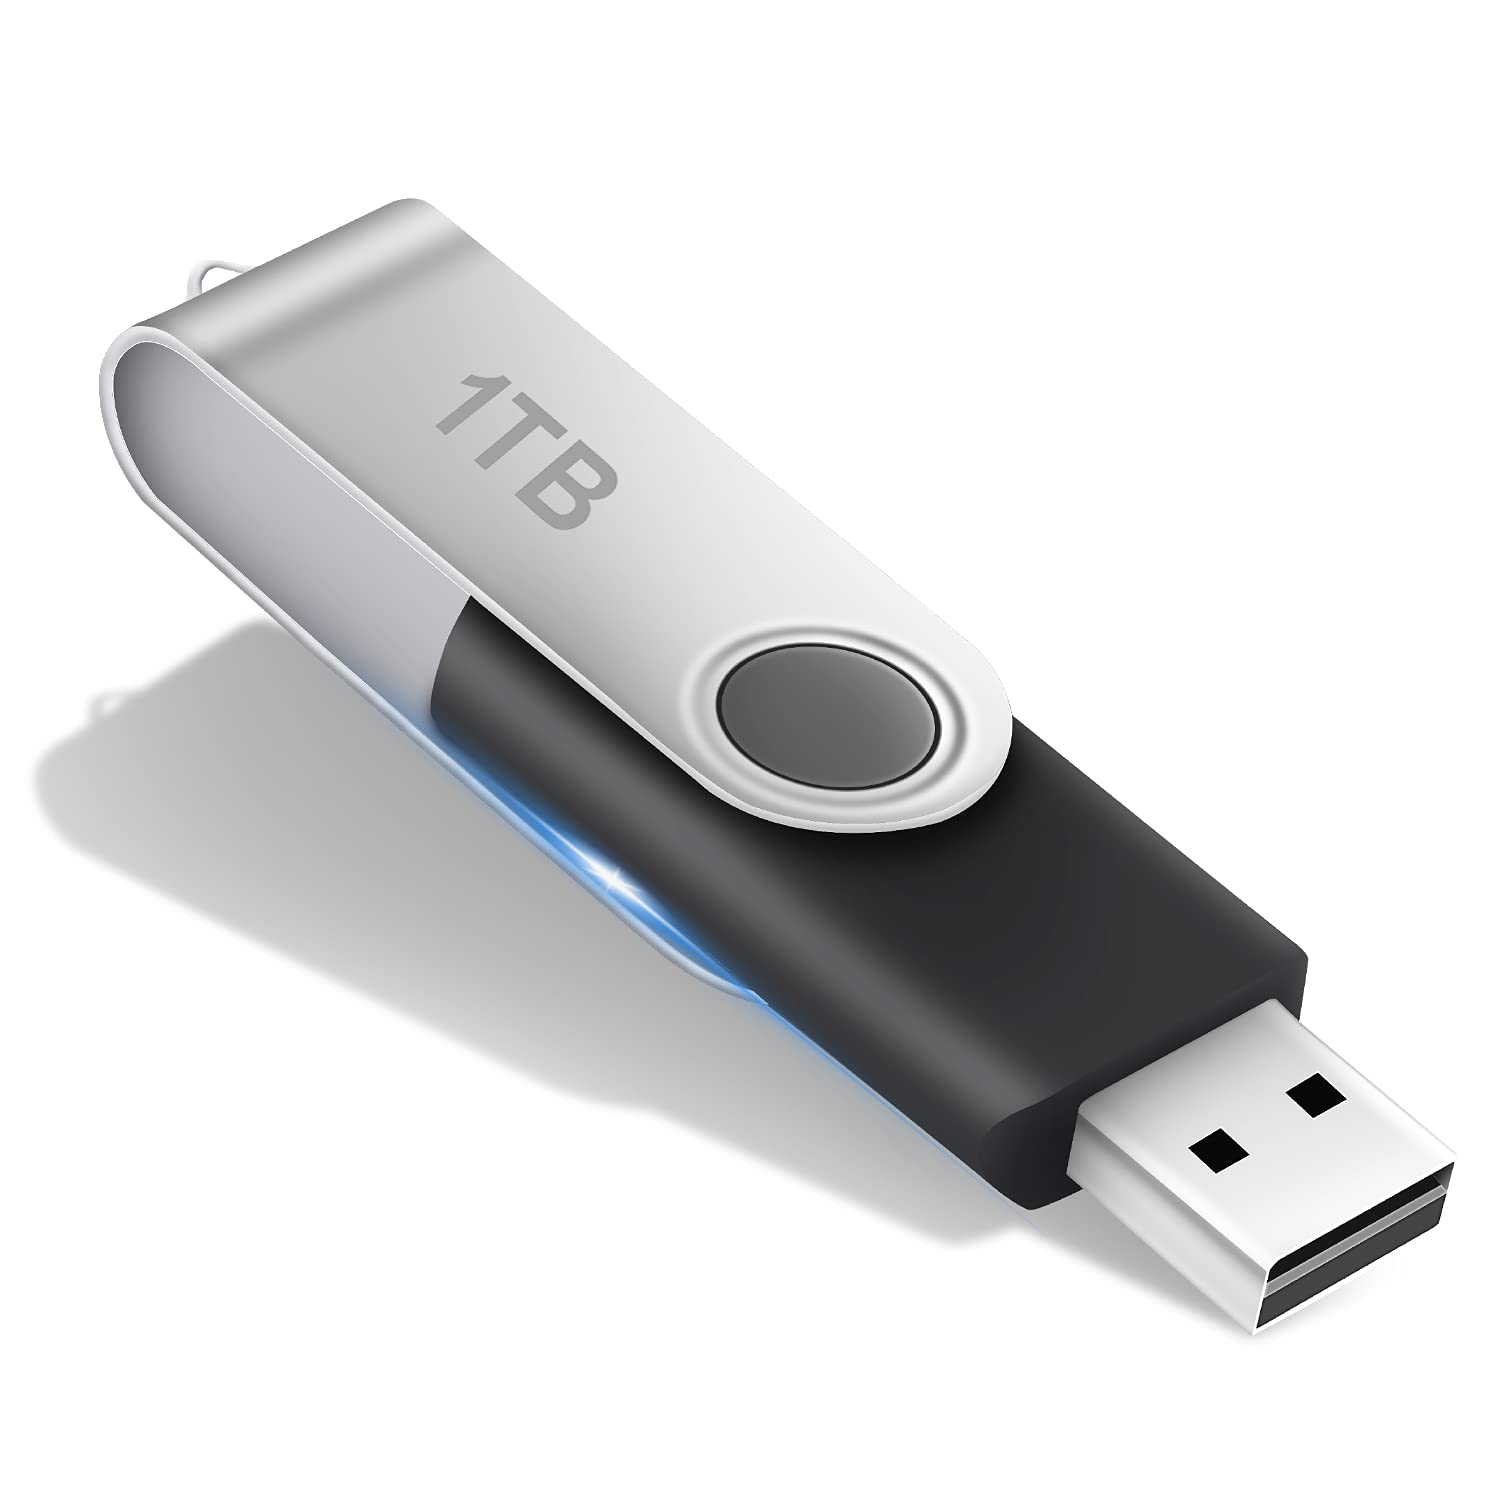 1TB Flash Drive 3.0, Super High-Speed Portable Thumb Drive 1TB Compatible with Computer/Laptop, Keychain Design USB Memory Stick 1000GB, USB 3.0 External Data Storage Drive 1TB